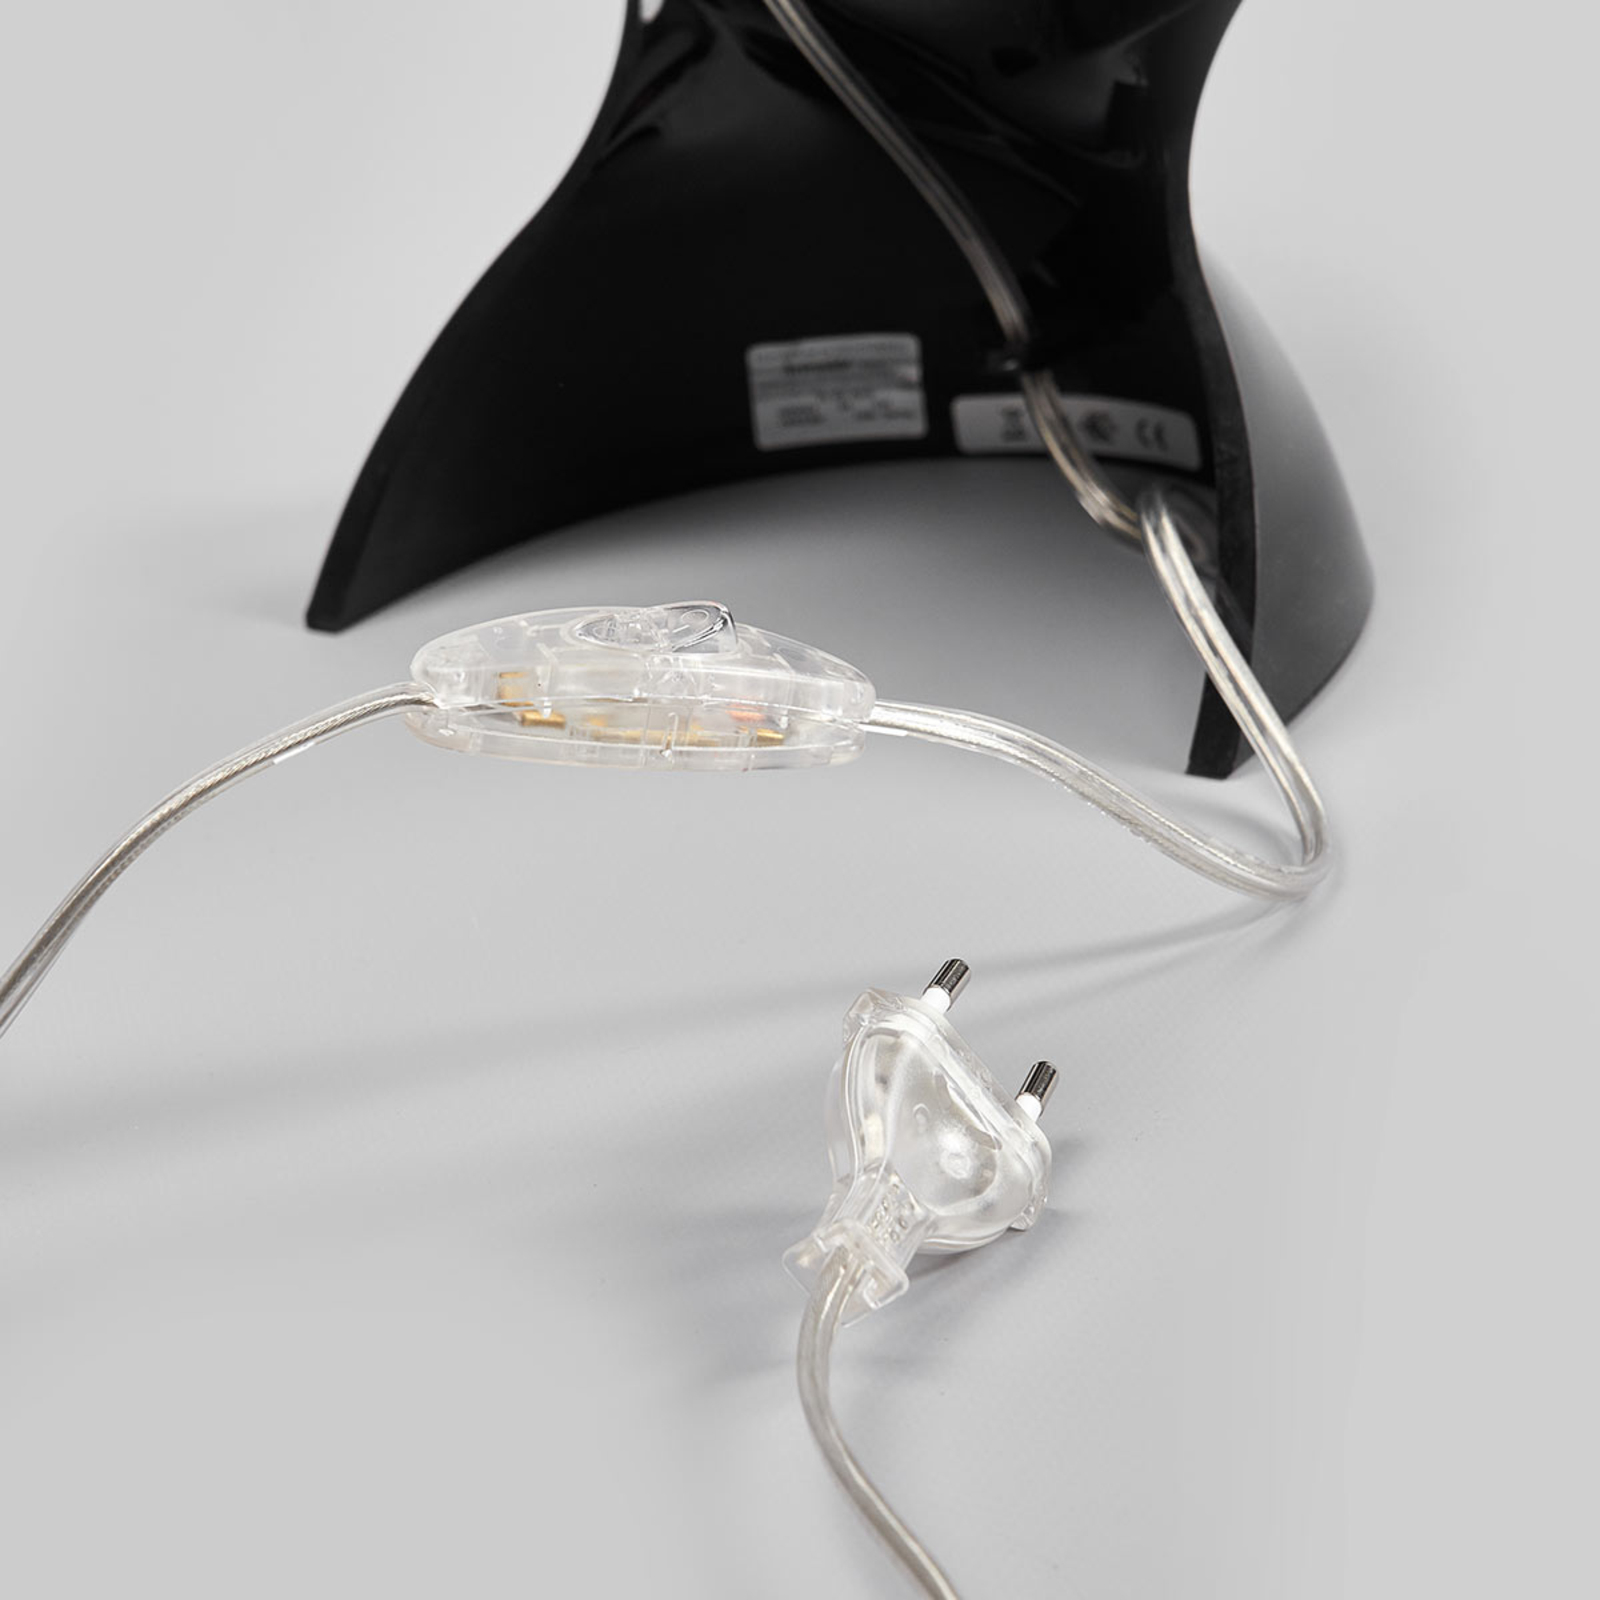 Artemide Dalù designerbordslampa i svart